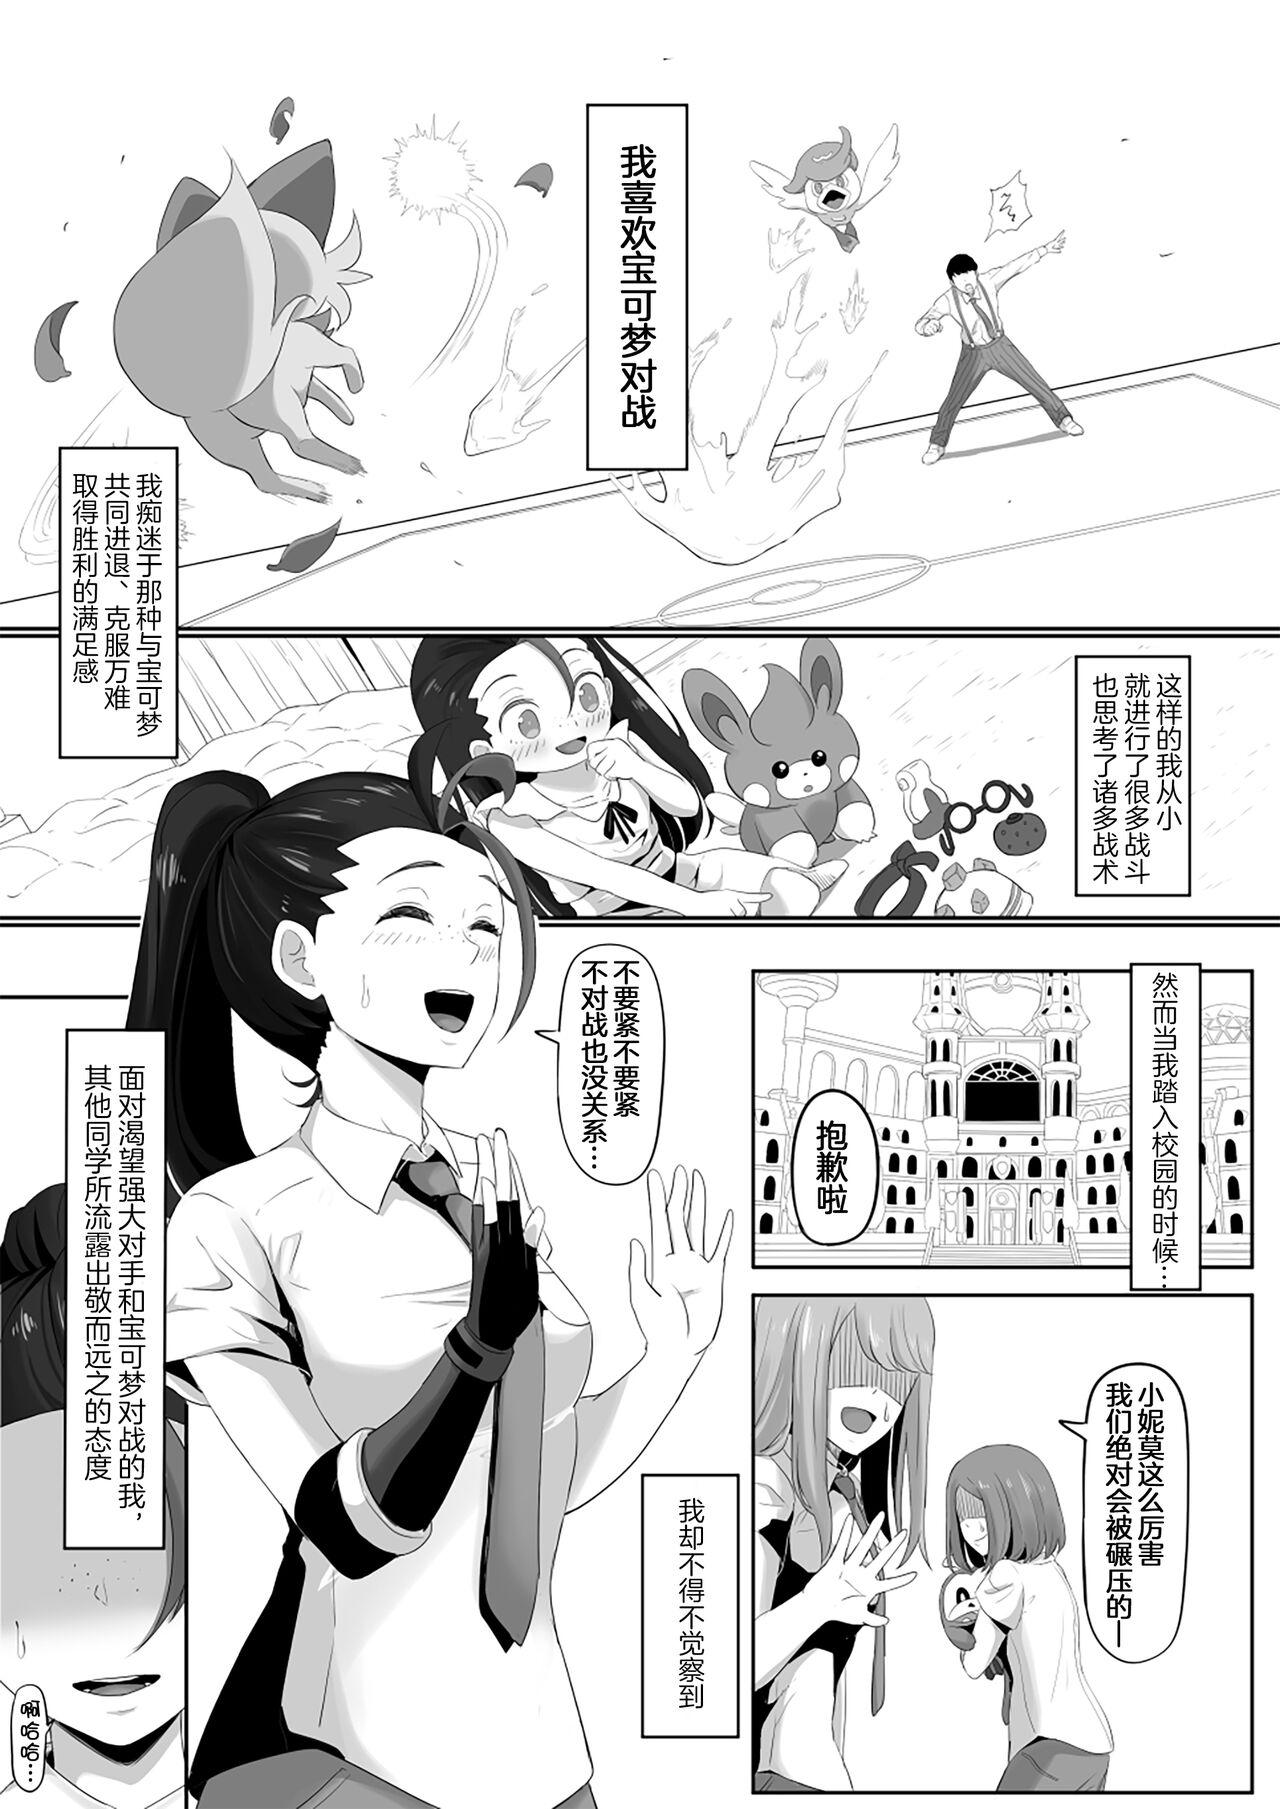 Chunky Nemona's Ero Manga | 成为我独一无二的劲敌可以吗 - Pokemon | pocket monsters Cuzinho - Picture 2